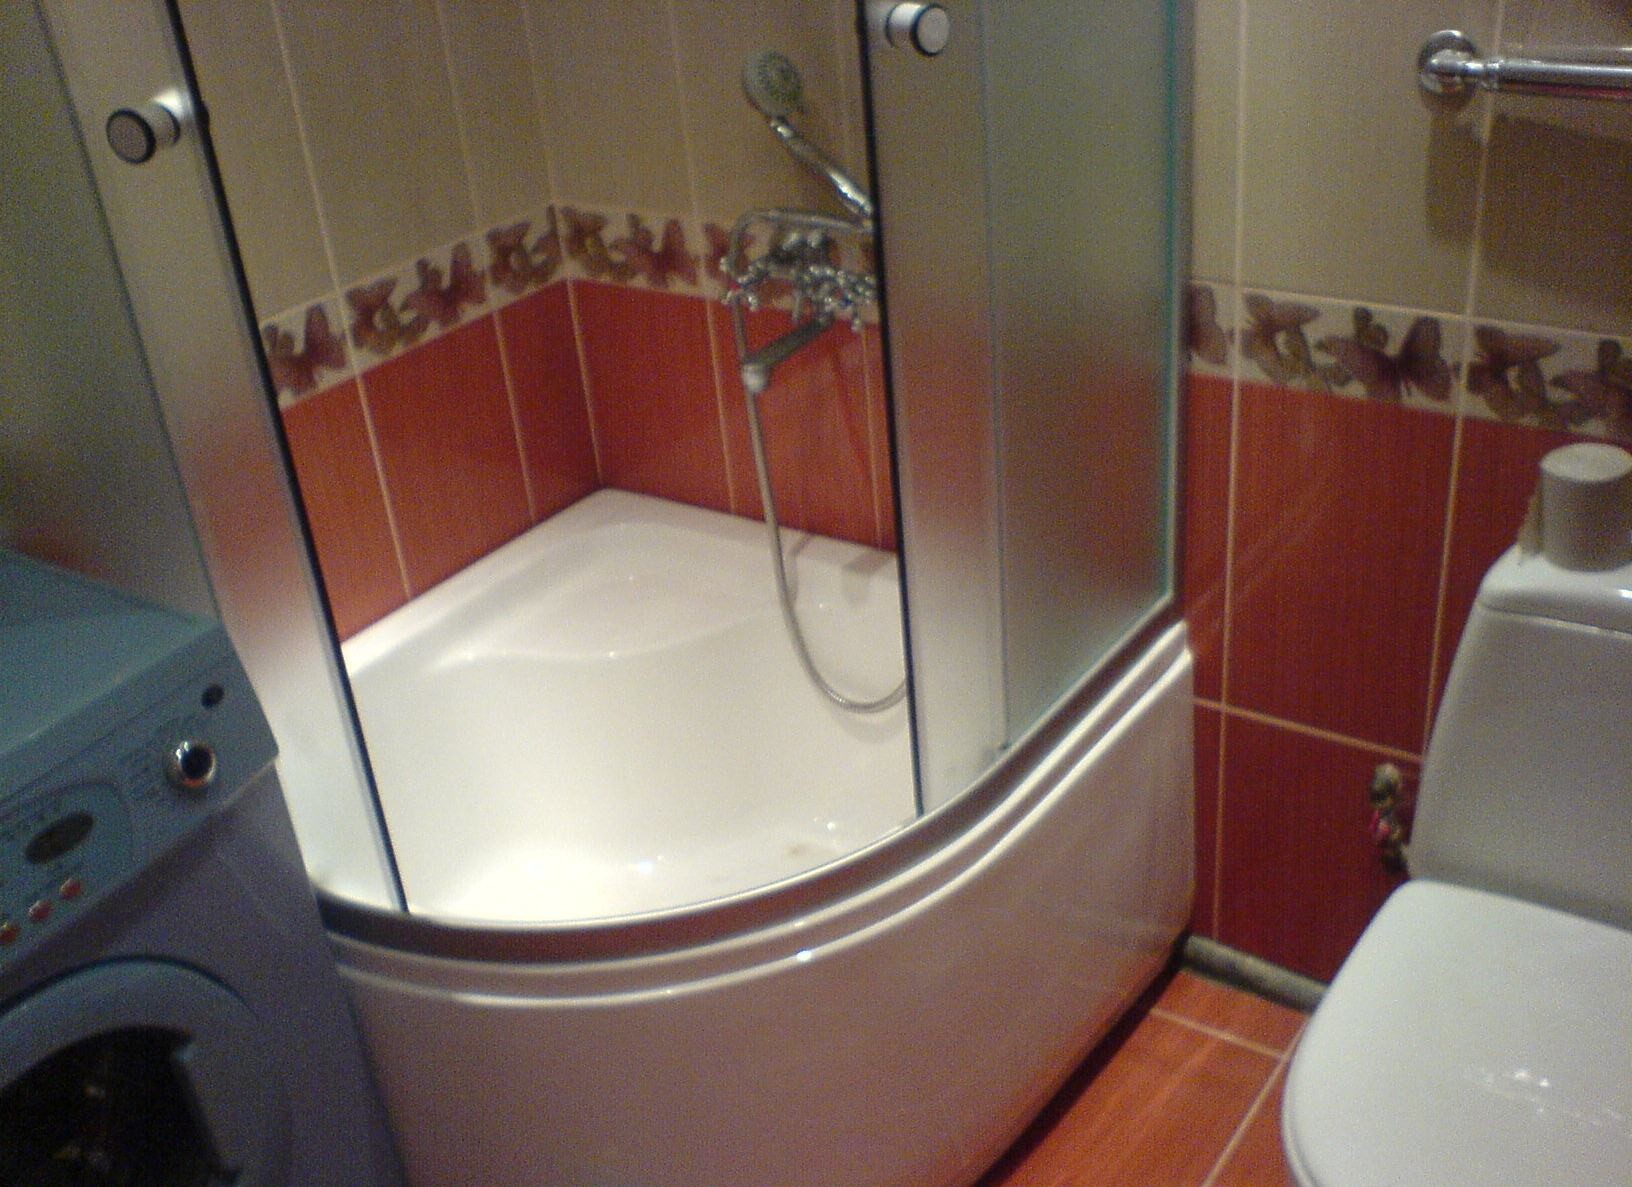 Дизайн ванной комнаты без унитаза 2 на 2